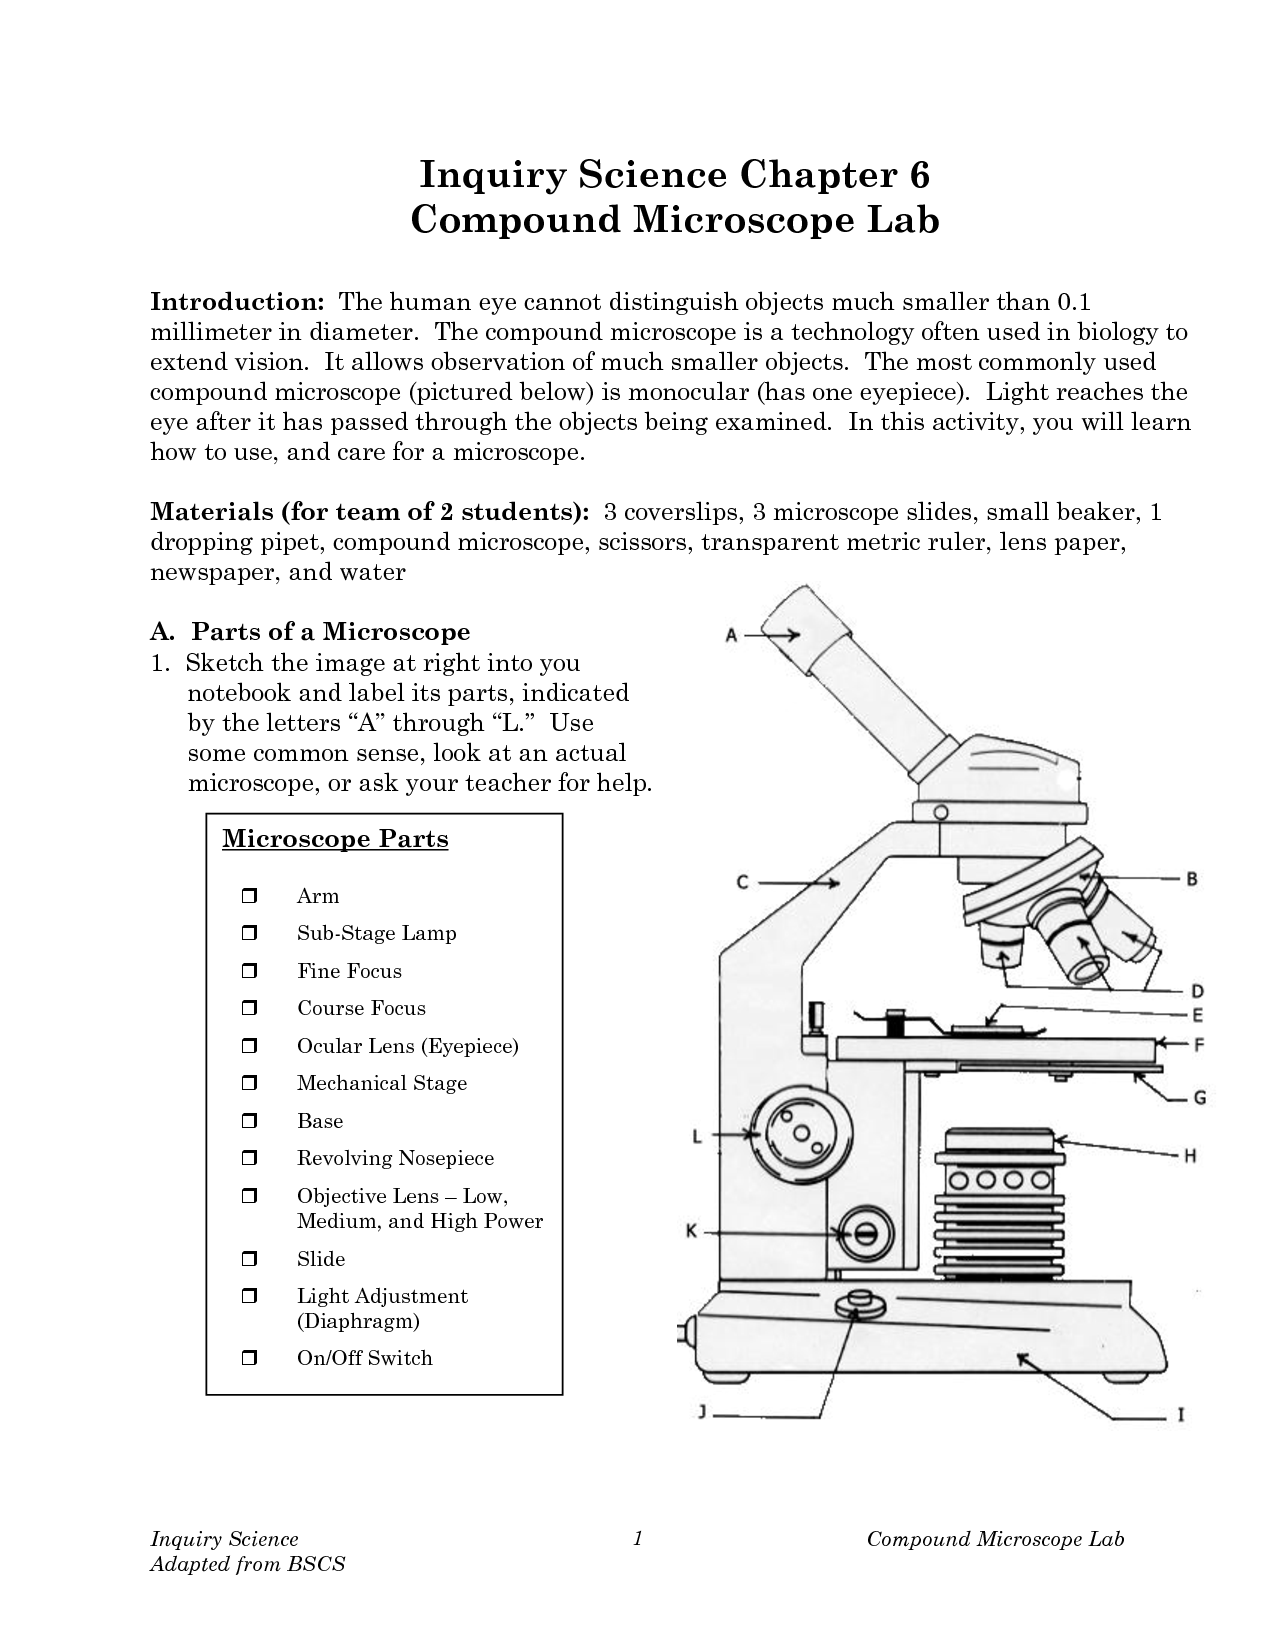 virtual-microscope-lab-youtube